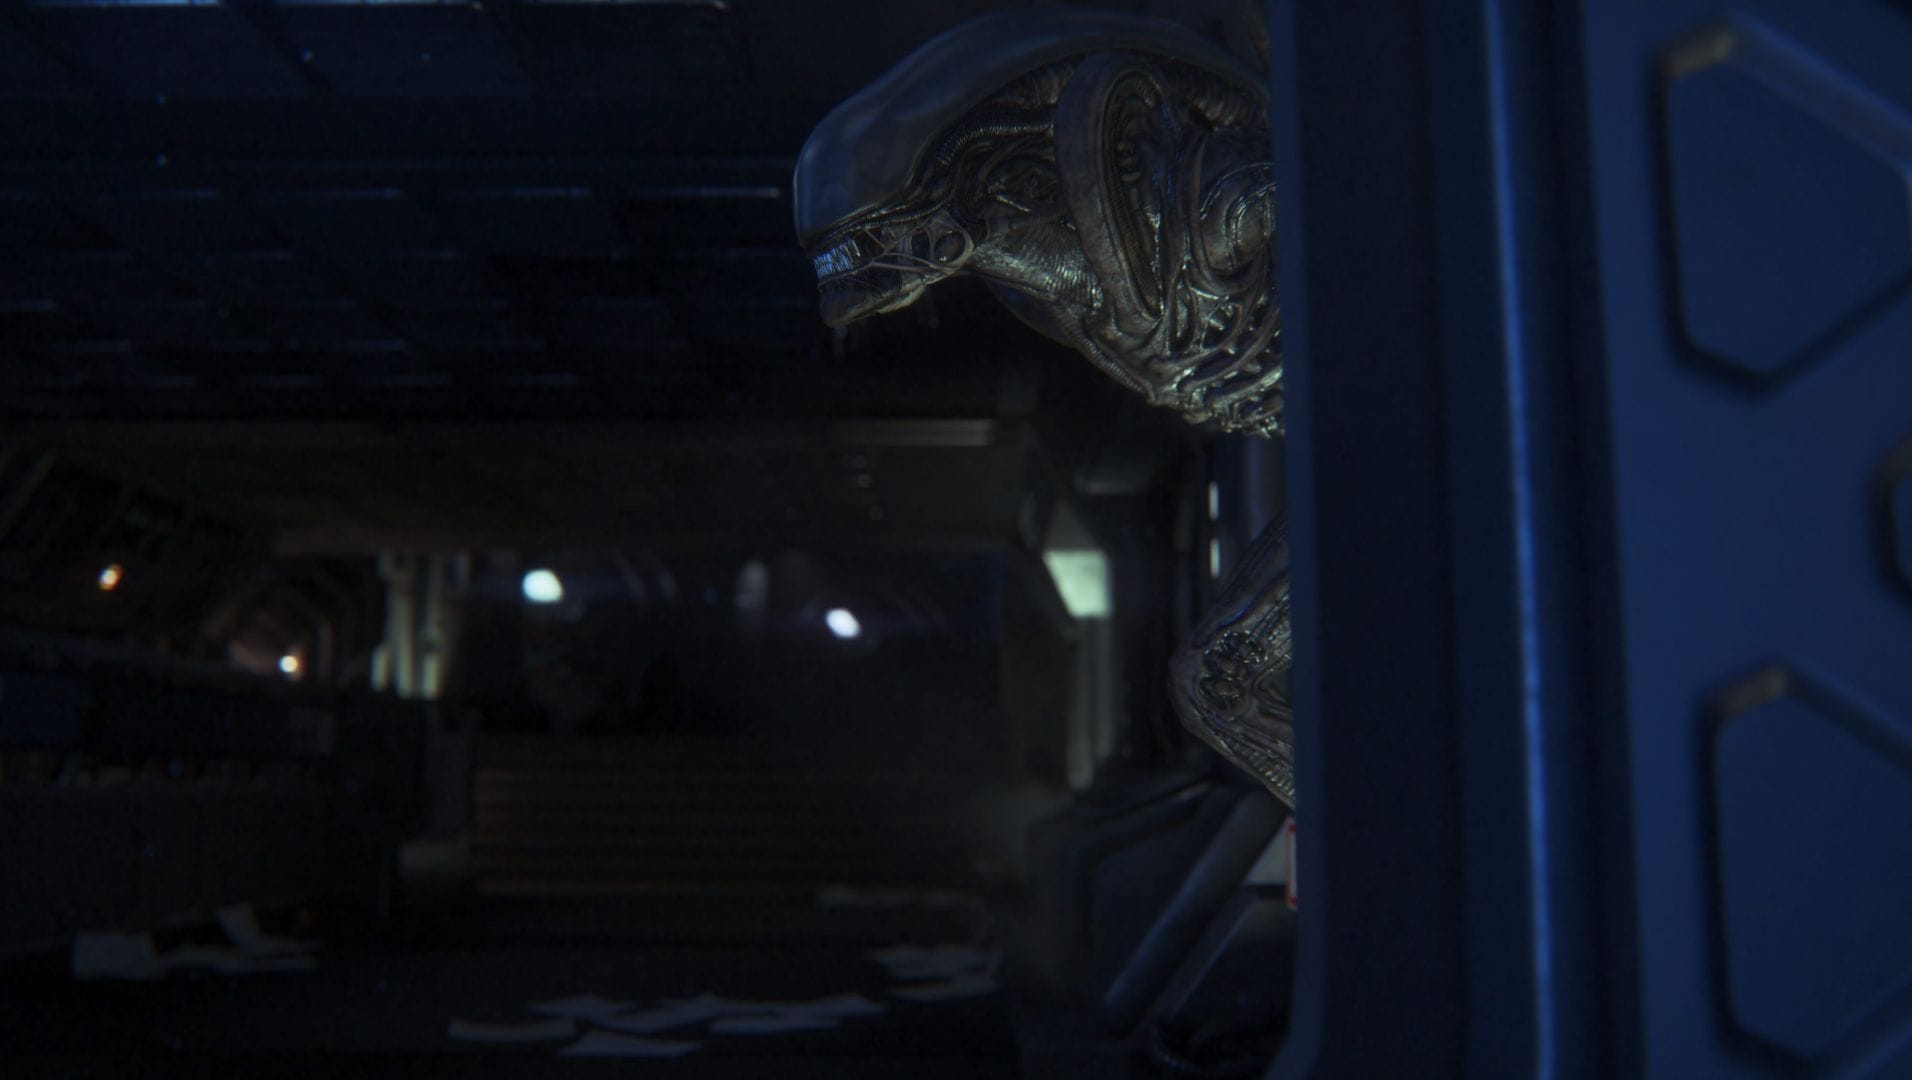 The xenomorph draws near in Alien: Isolation.